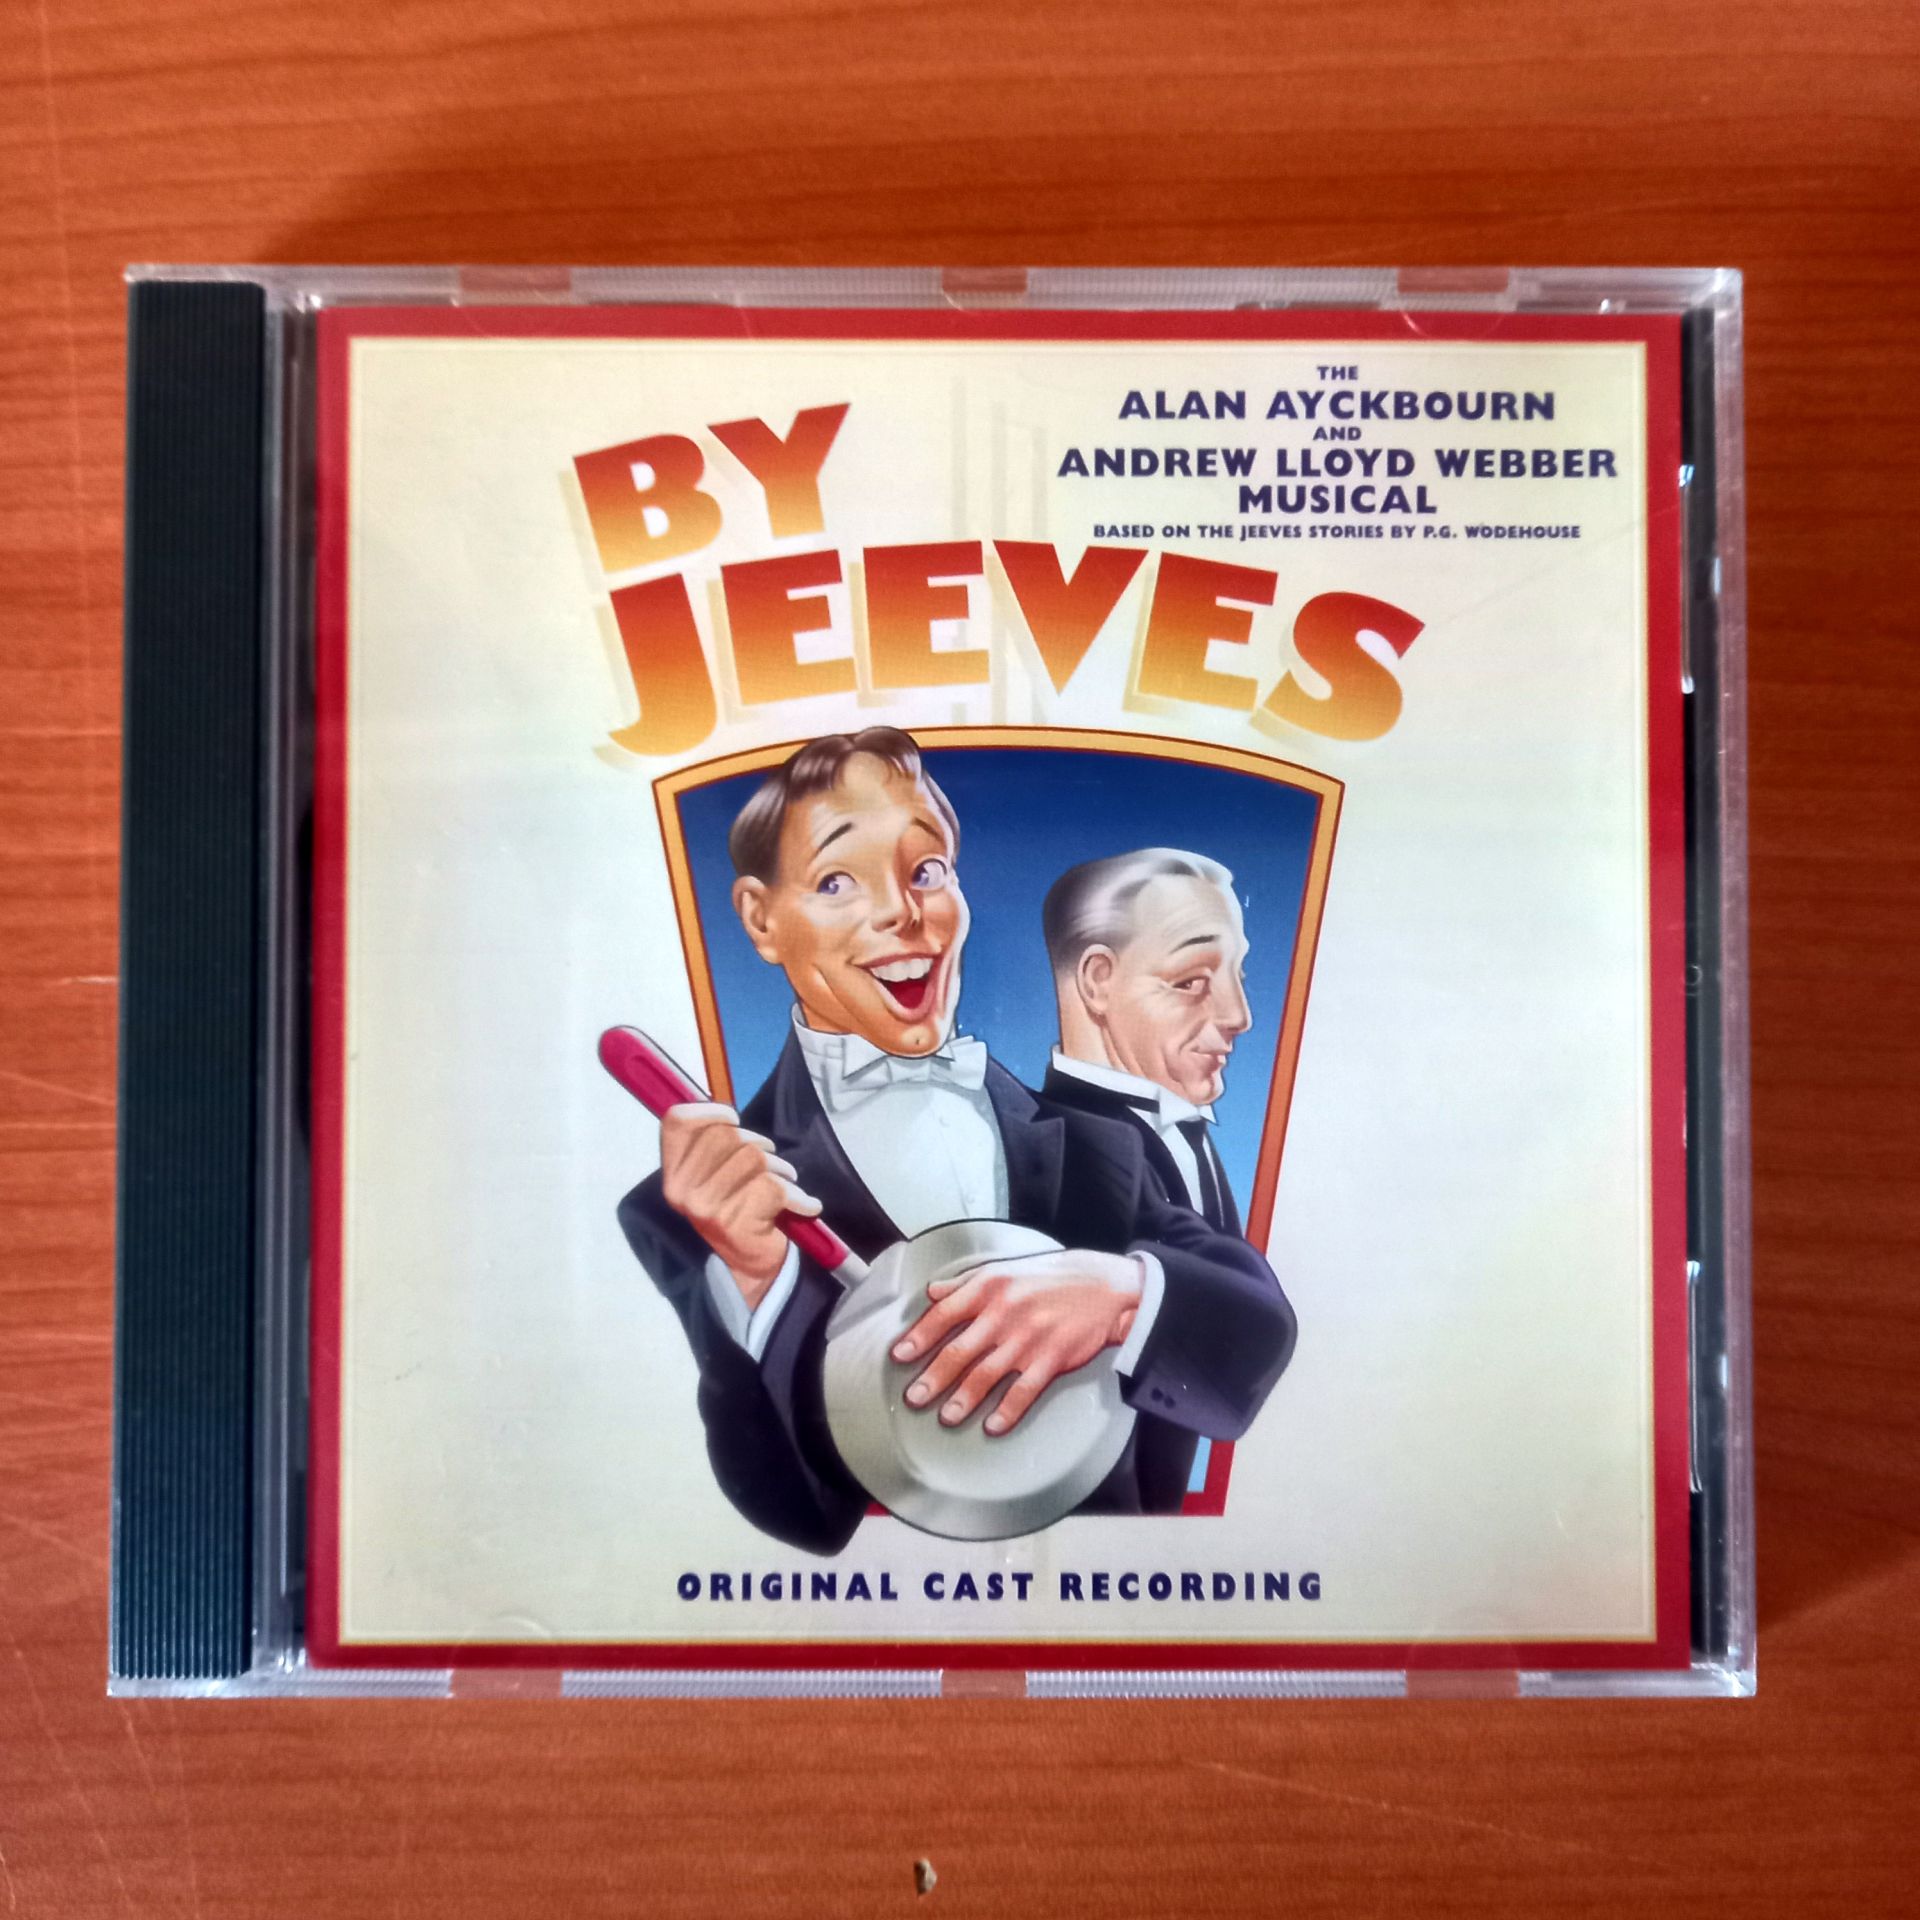 BY JEEVES / ORIGINAL CAST RECORDING / ANDREW LLOYD WEBBER & ALAN AYCKBOURN (1996) - CD 2.EL